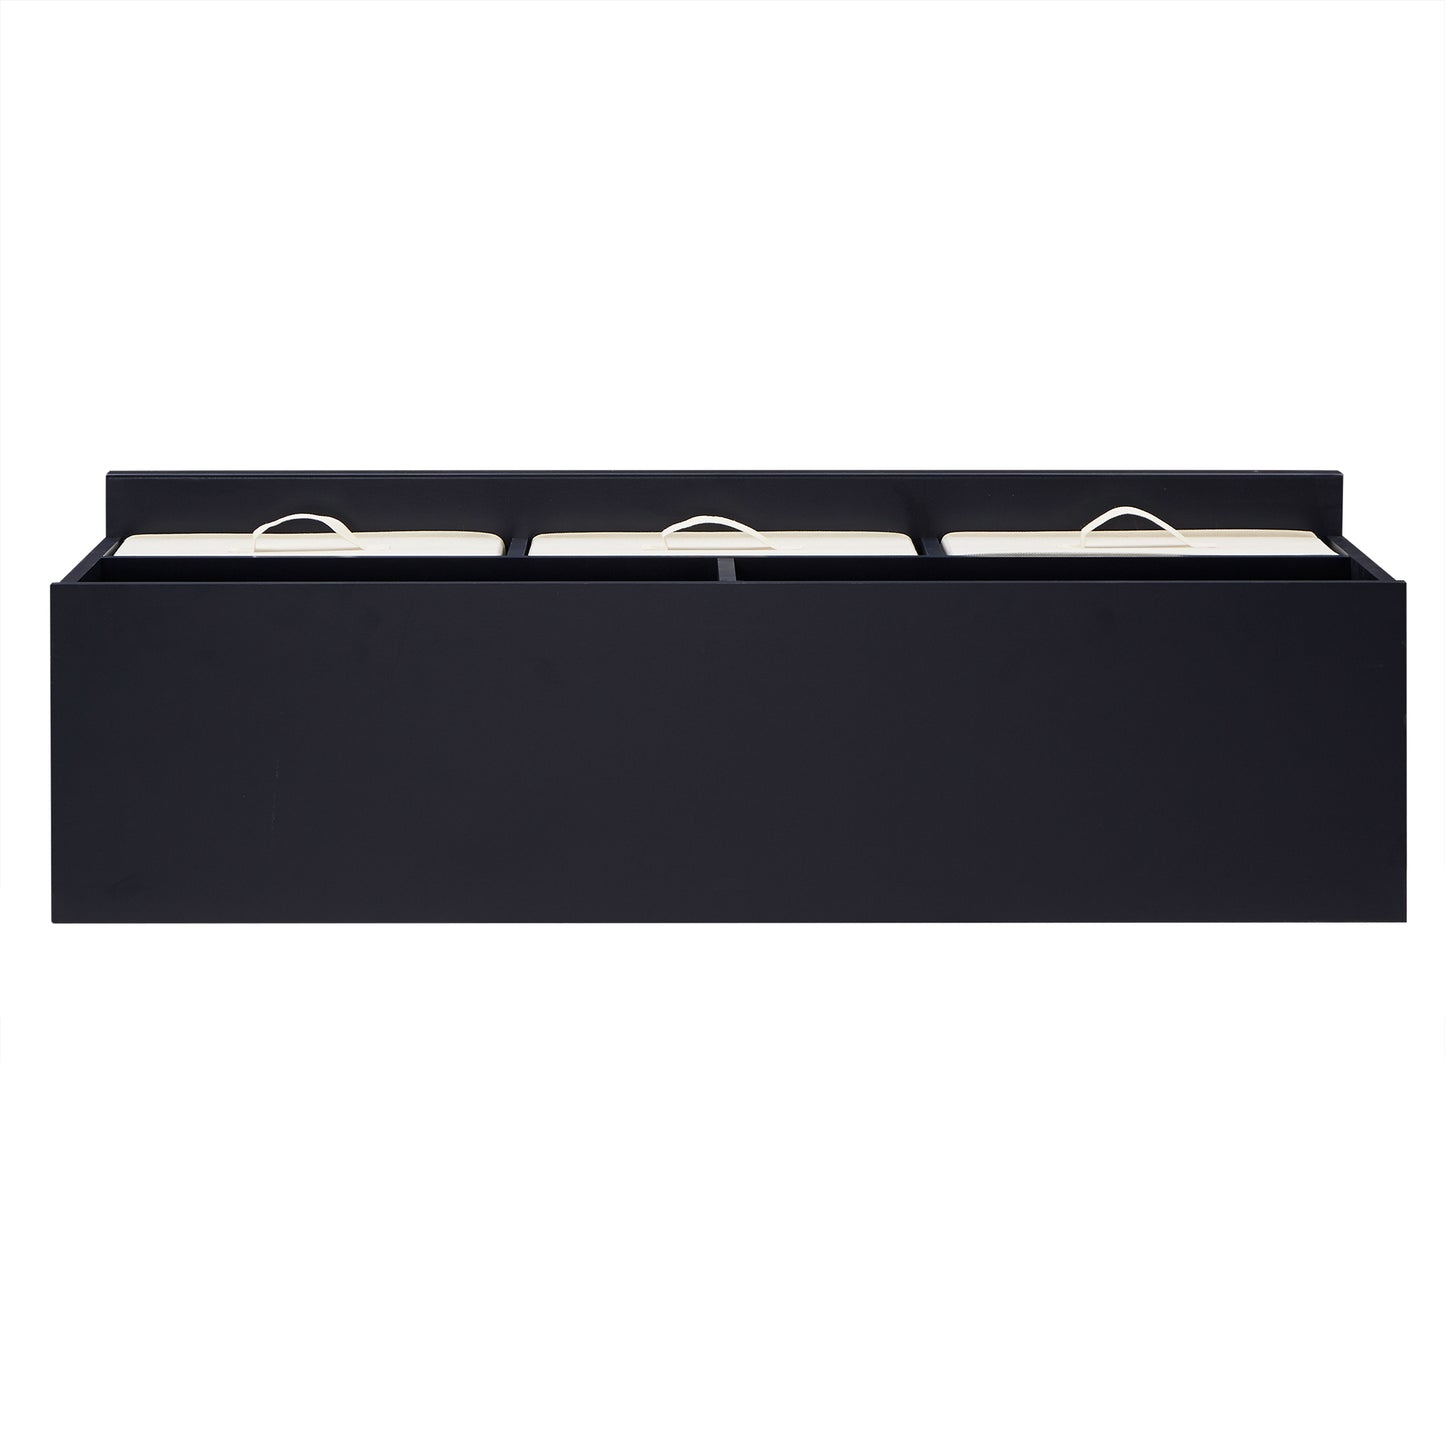 Modular Stacking Storage Bins - Charcoal Black, 1 Box with 3 Drawers